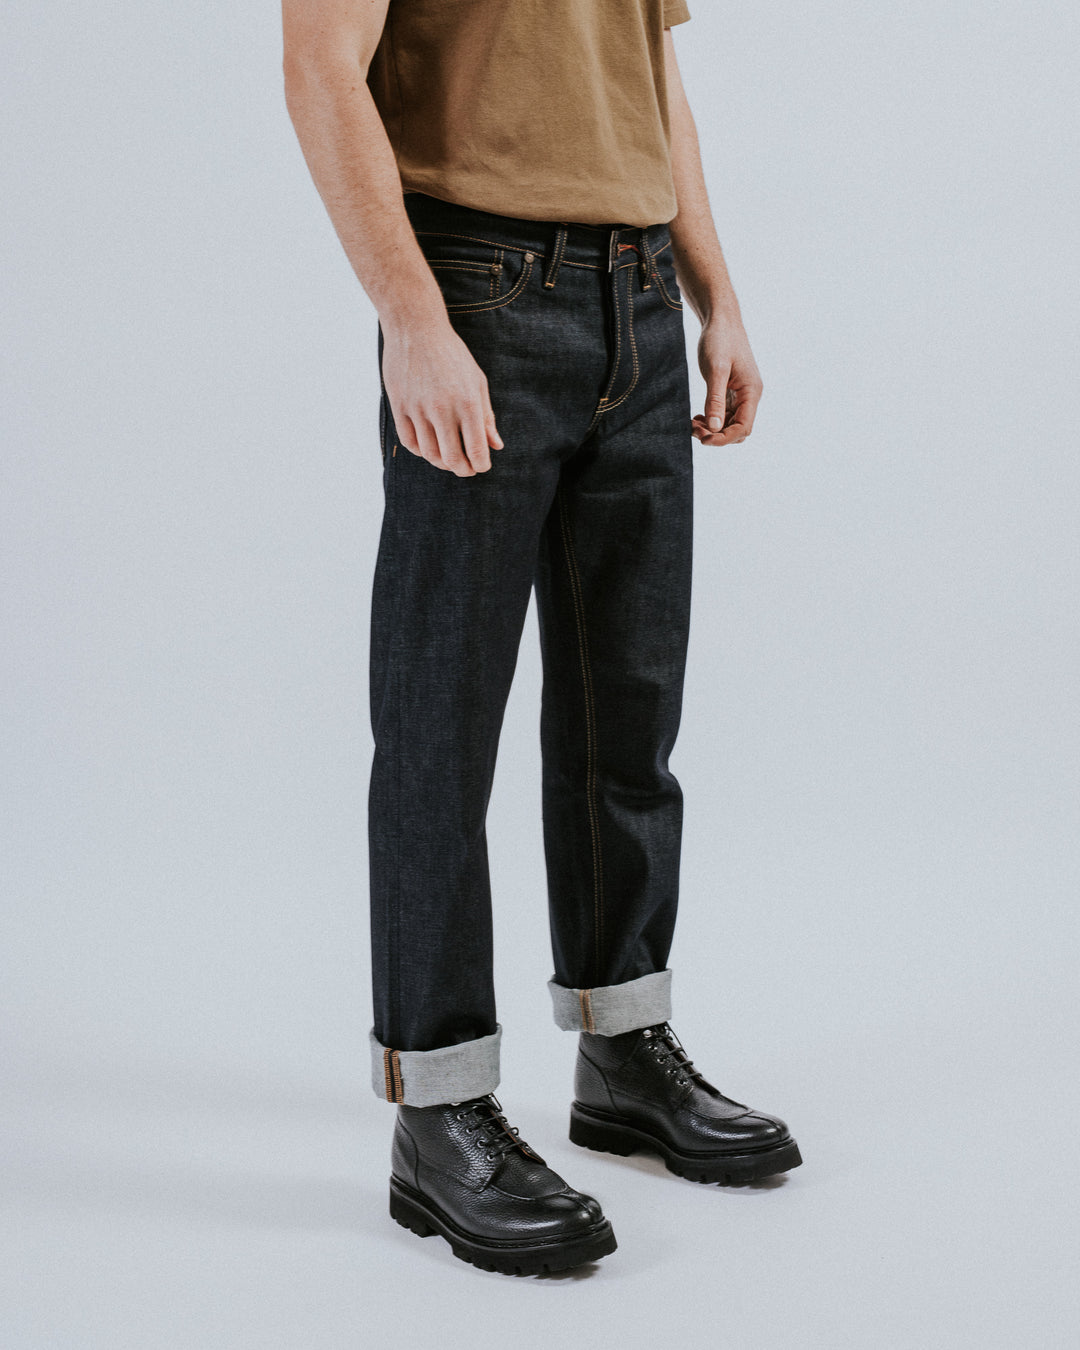 Men's Organic Cotton, Selvedge & Stretch Denim Jeans | Hiut Denim Co.